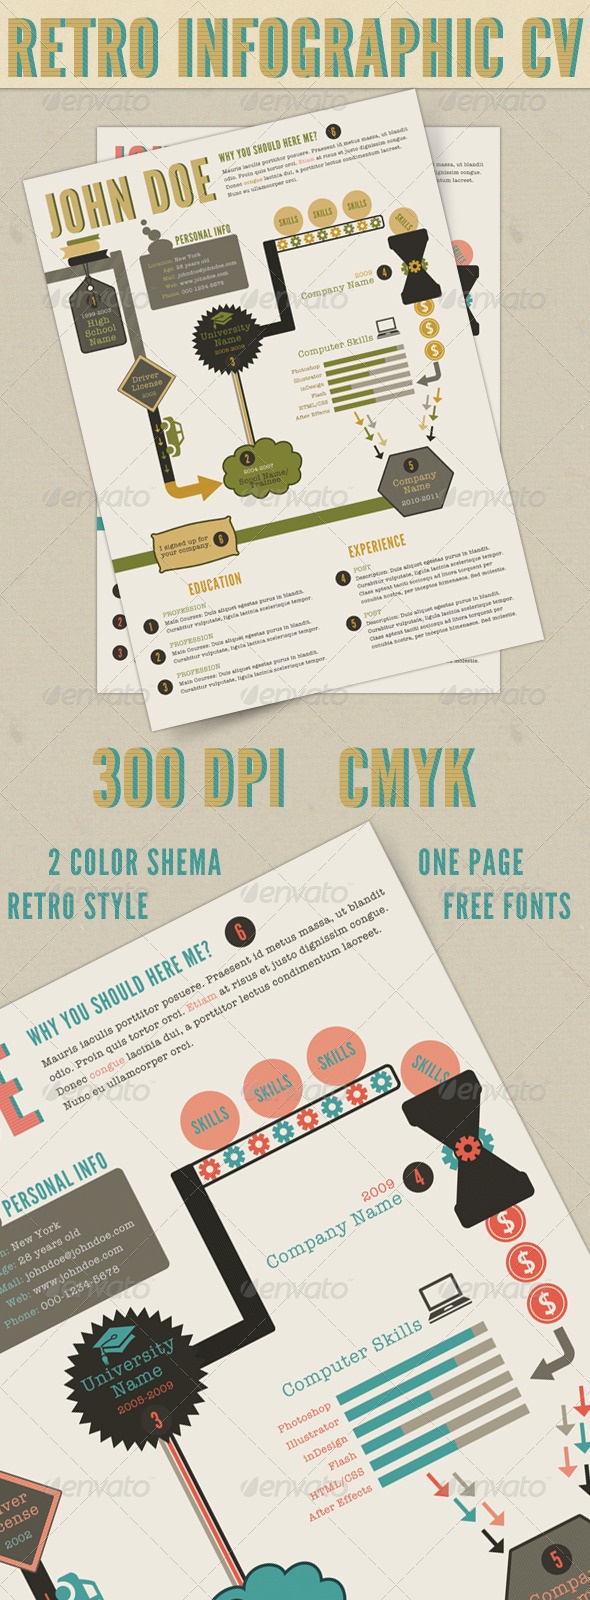 Retro Infographics Resume - http://graphicriver.net/item/retro-infographics-resume/400231?WT.ac=search_thumb&WT.z_author=barpaff